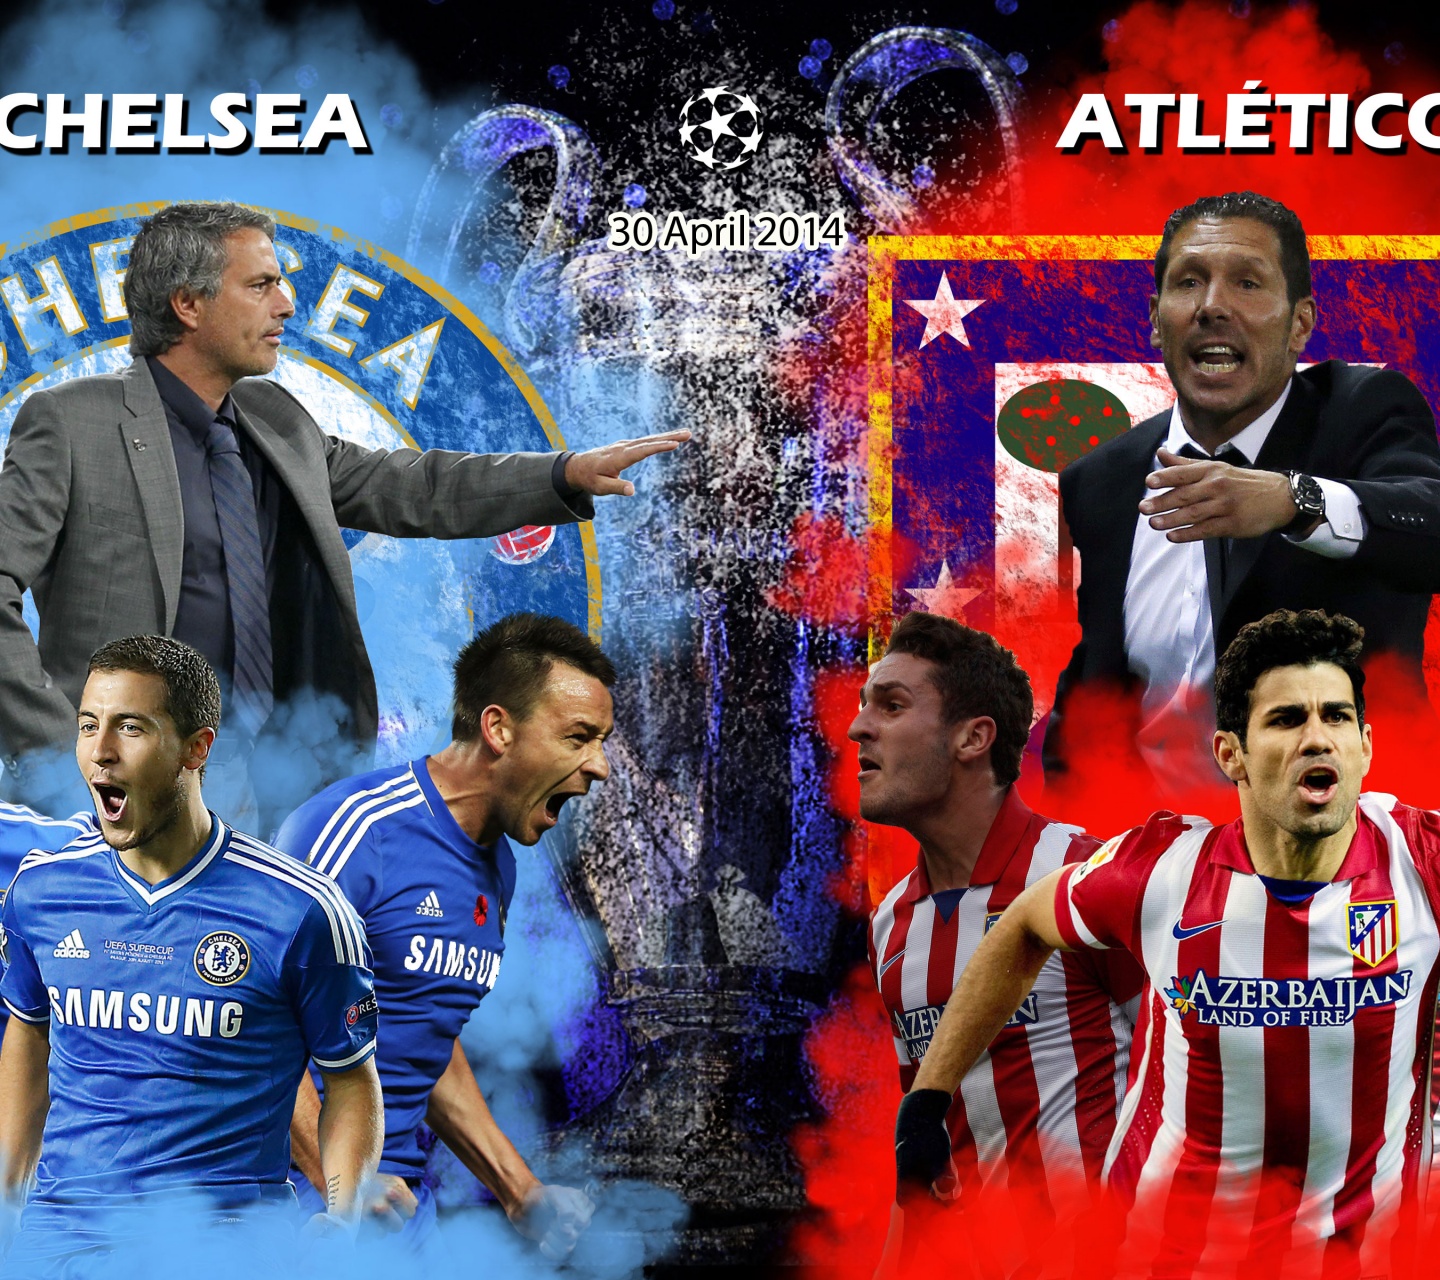 Chelsea FC Vs Atletico De Madrid